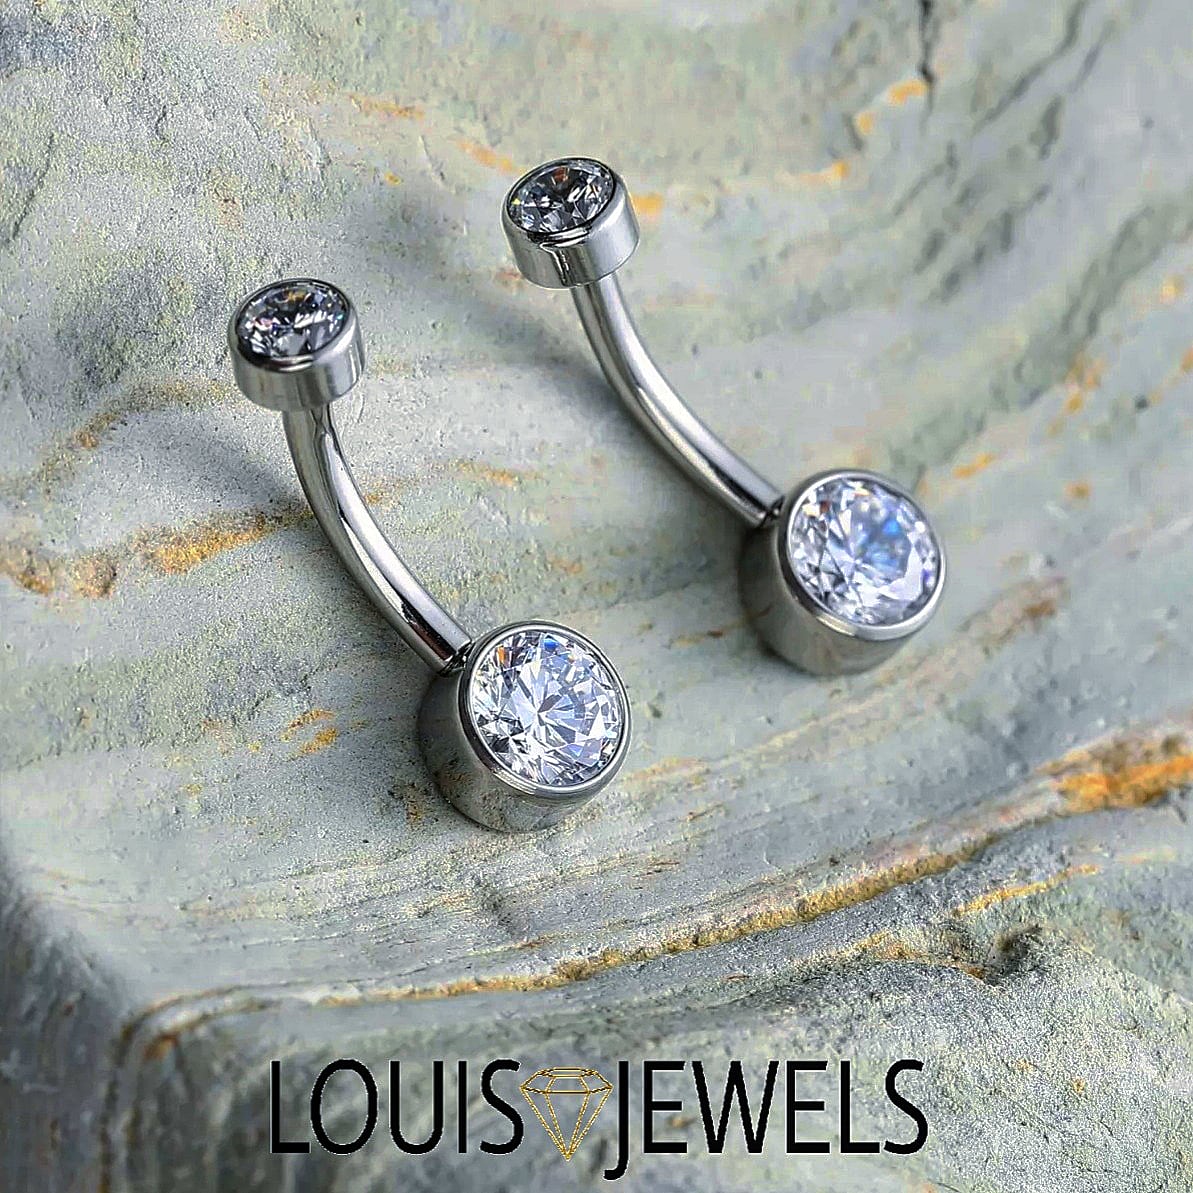 Louis Jewels